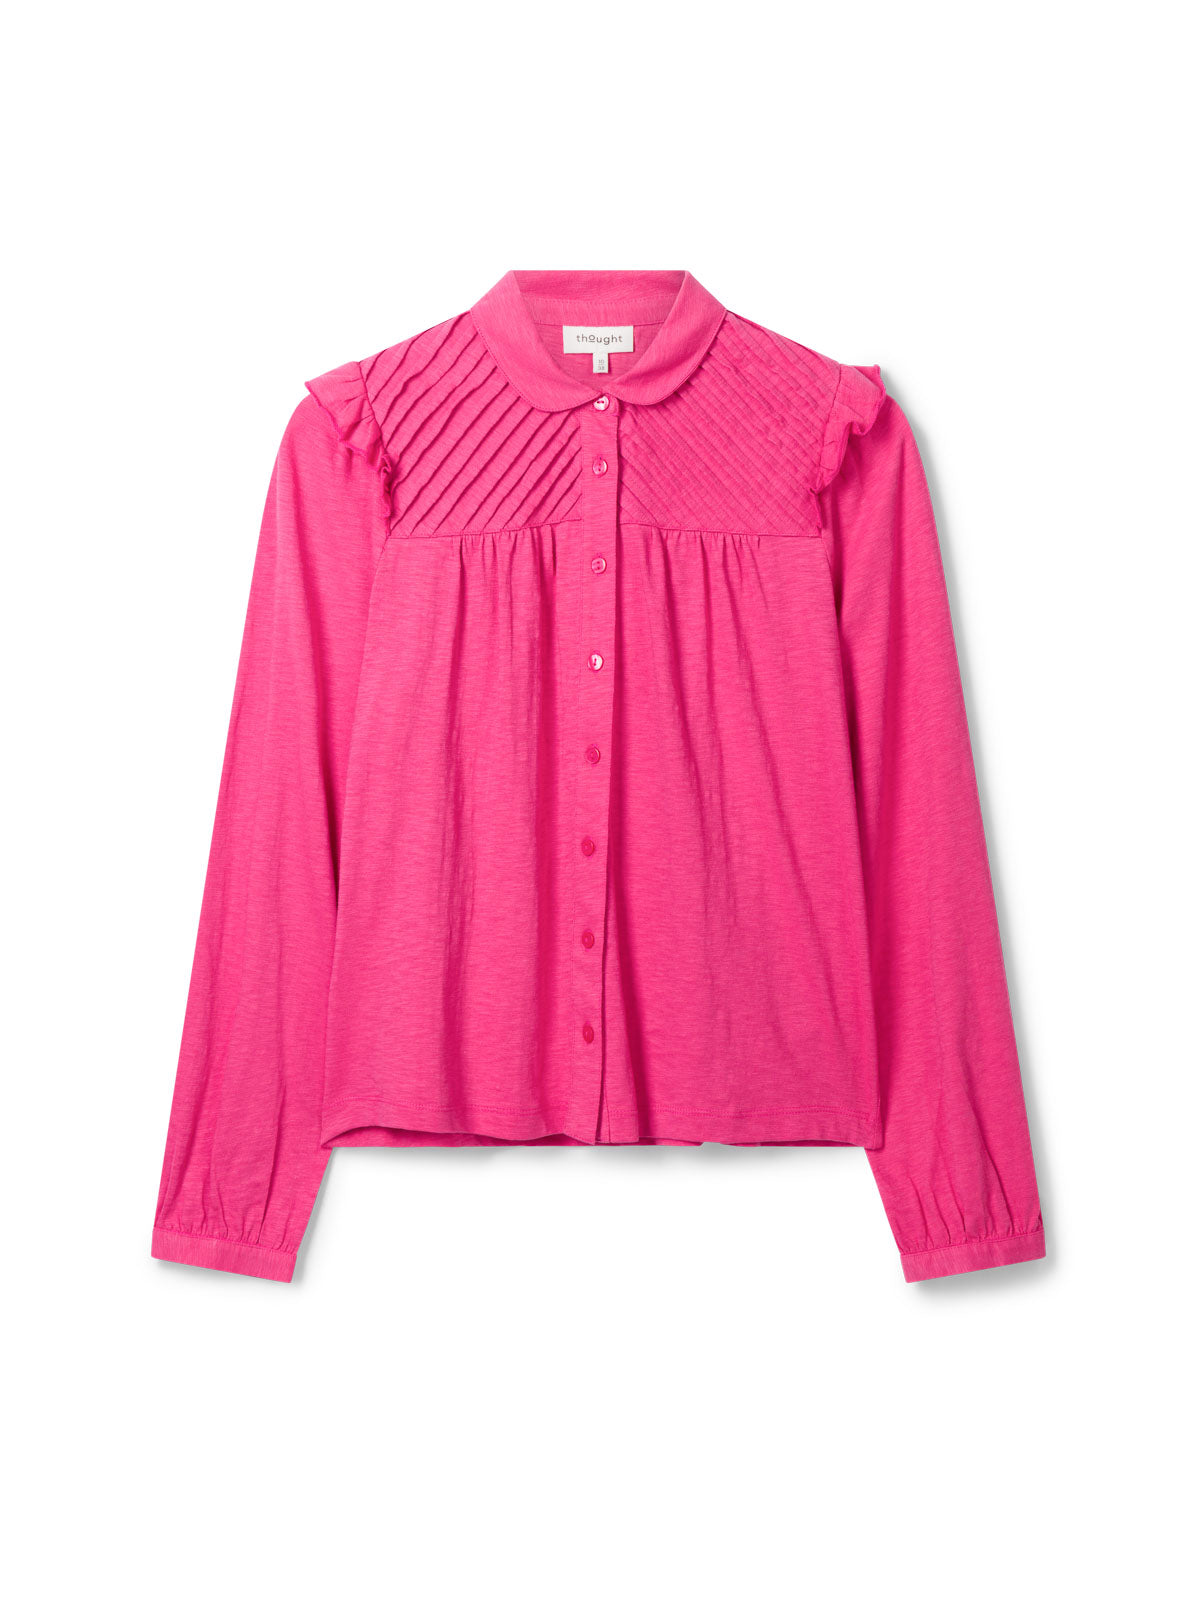 Beca Fairtrade Organic Cotton Pin Tuck Shirt - Radish Pink